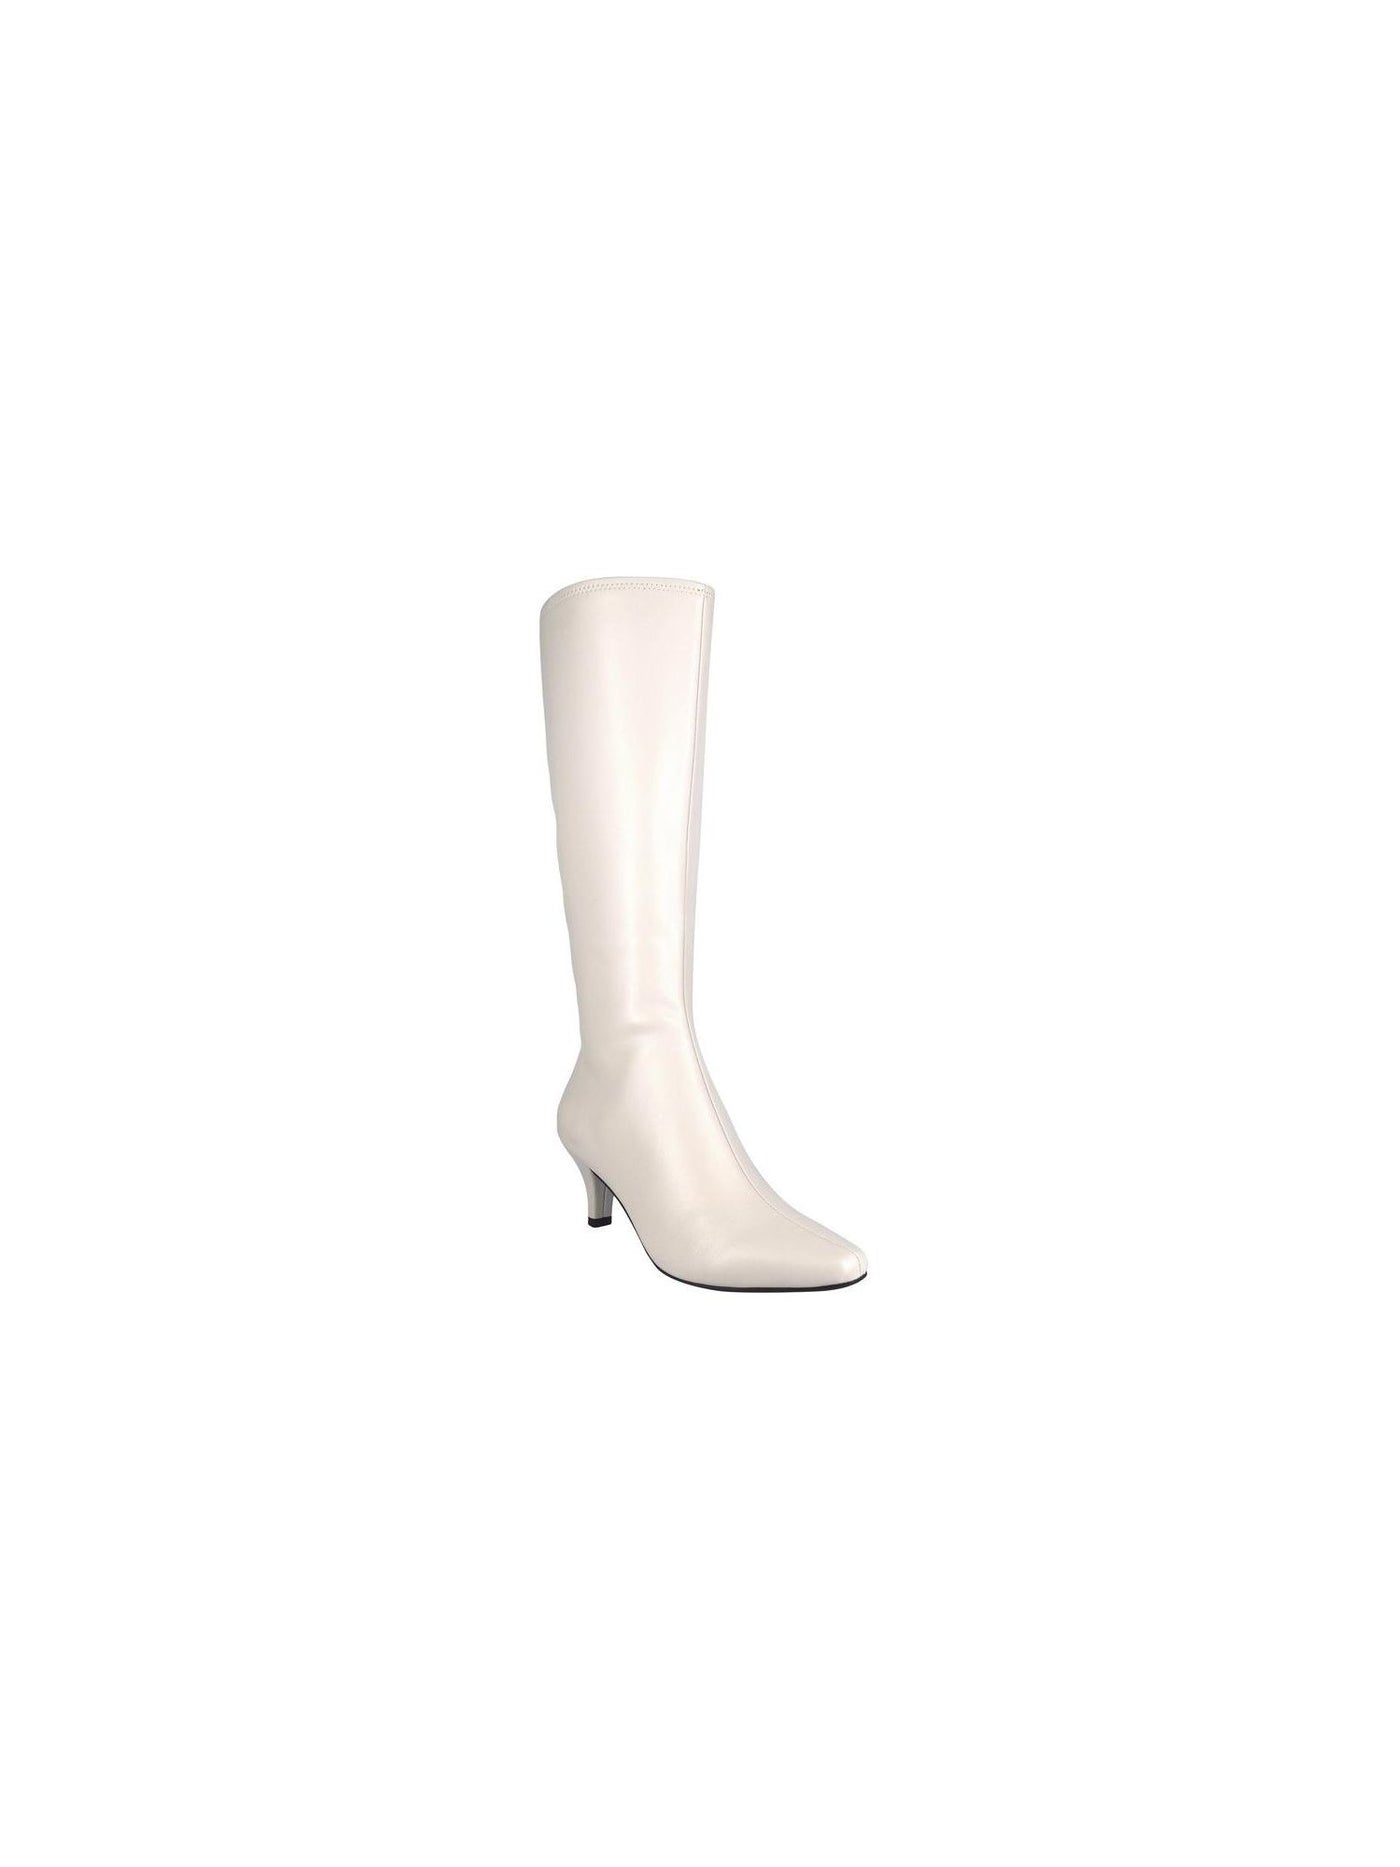 IMPO Womens Ivory Padded Non-Slip Namora Almond Toe Kitten Heel Zip-Up Dress Boots 7 M